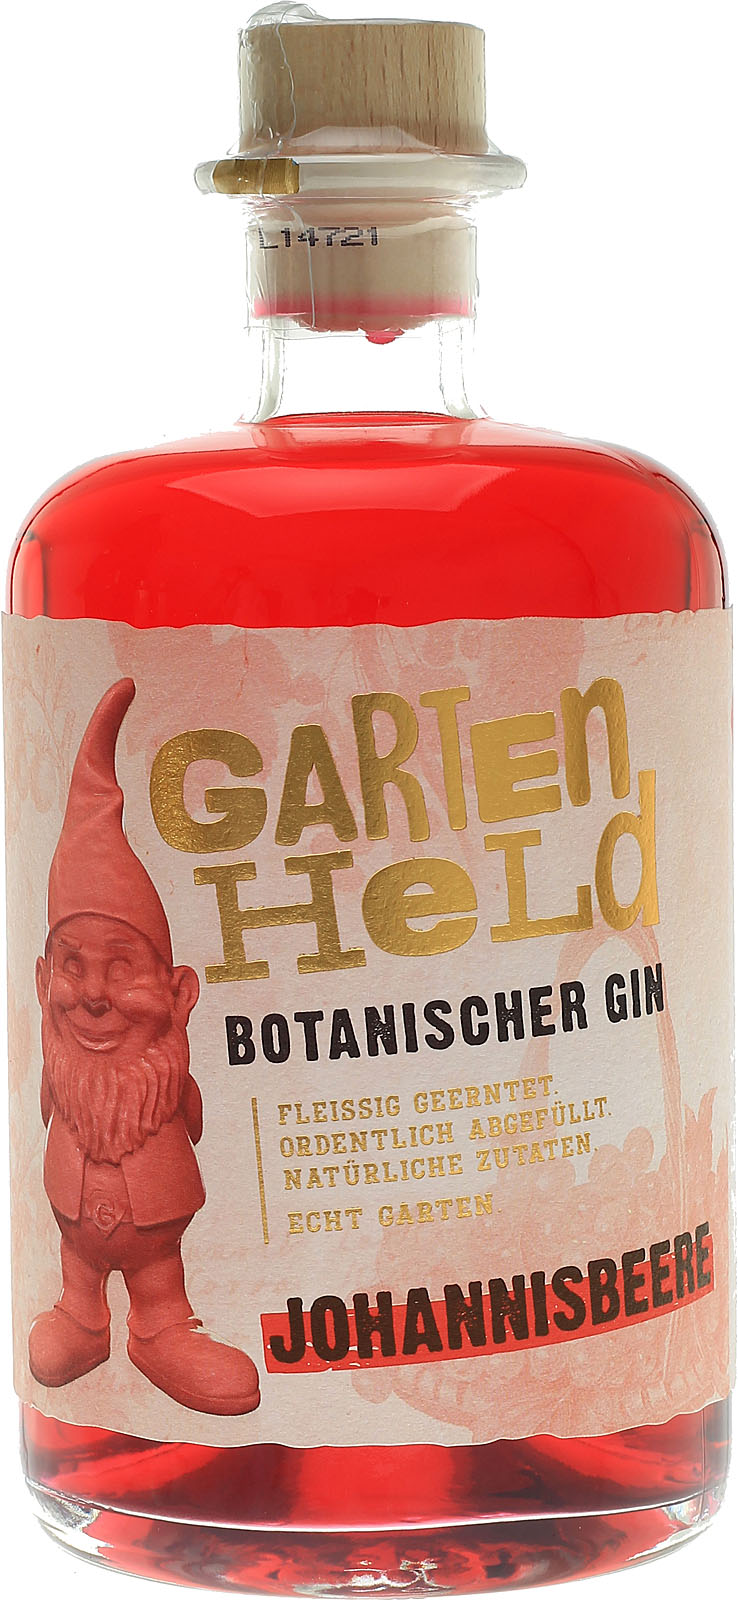 Gartenheld Botanischer Gin Johannisbeere 0,5 - Liter Be